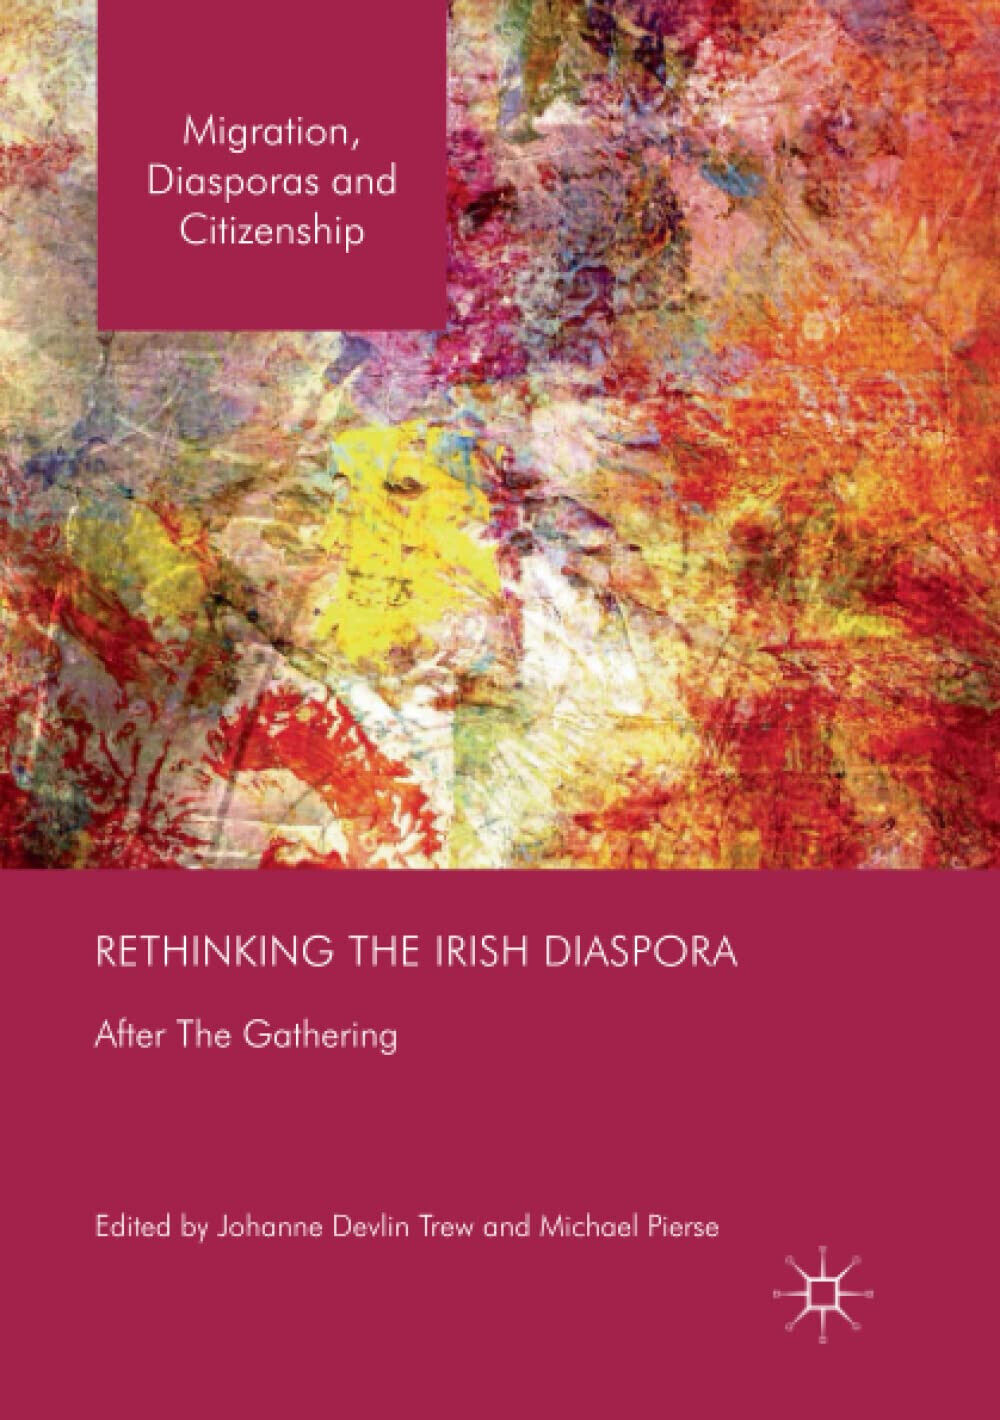 Rethinking The Irish Diaspora - Johanne Devlin Trew  - Palgrave, 2020